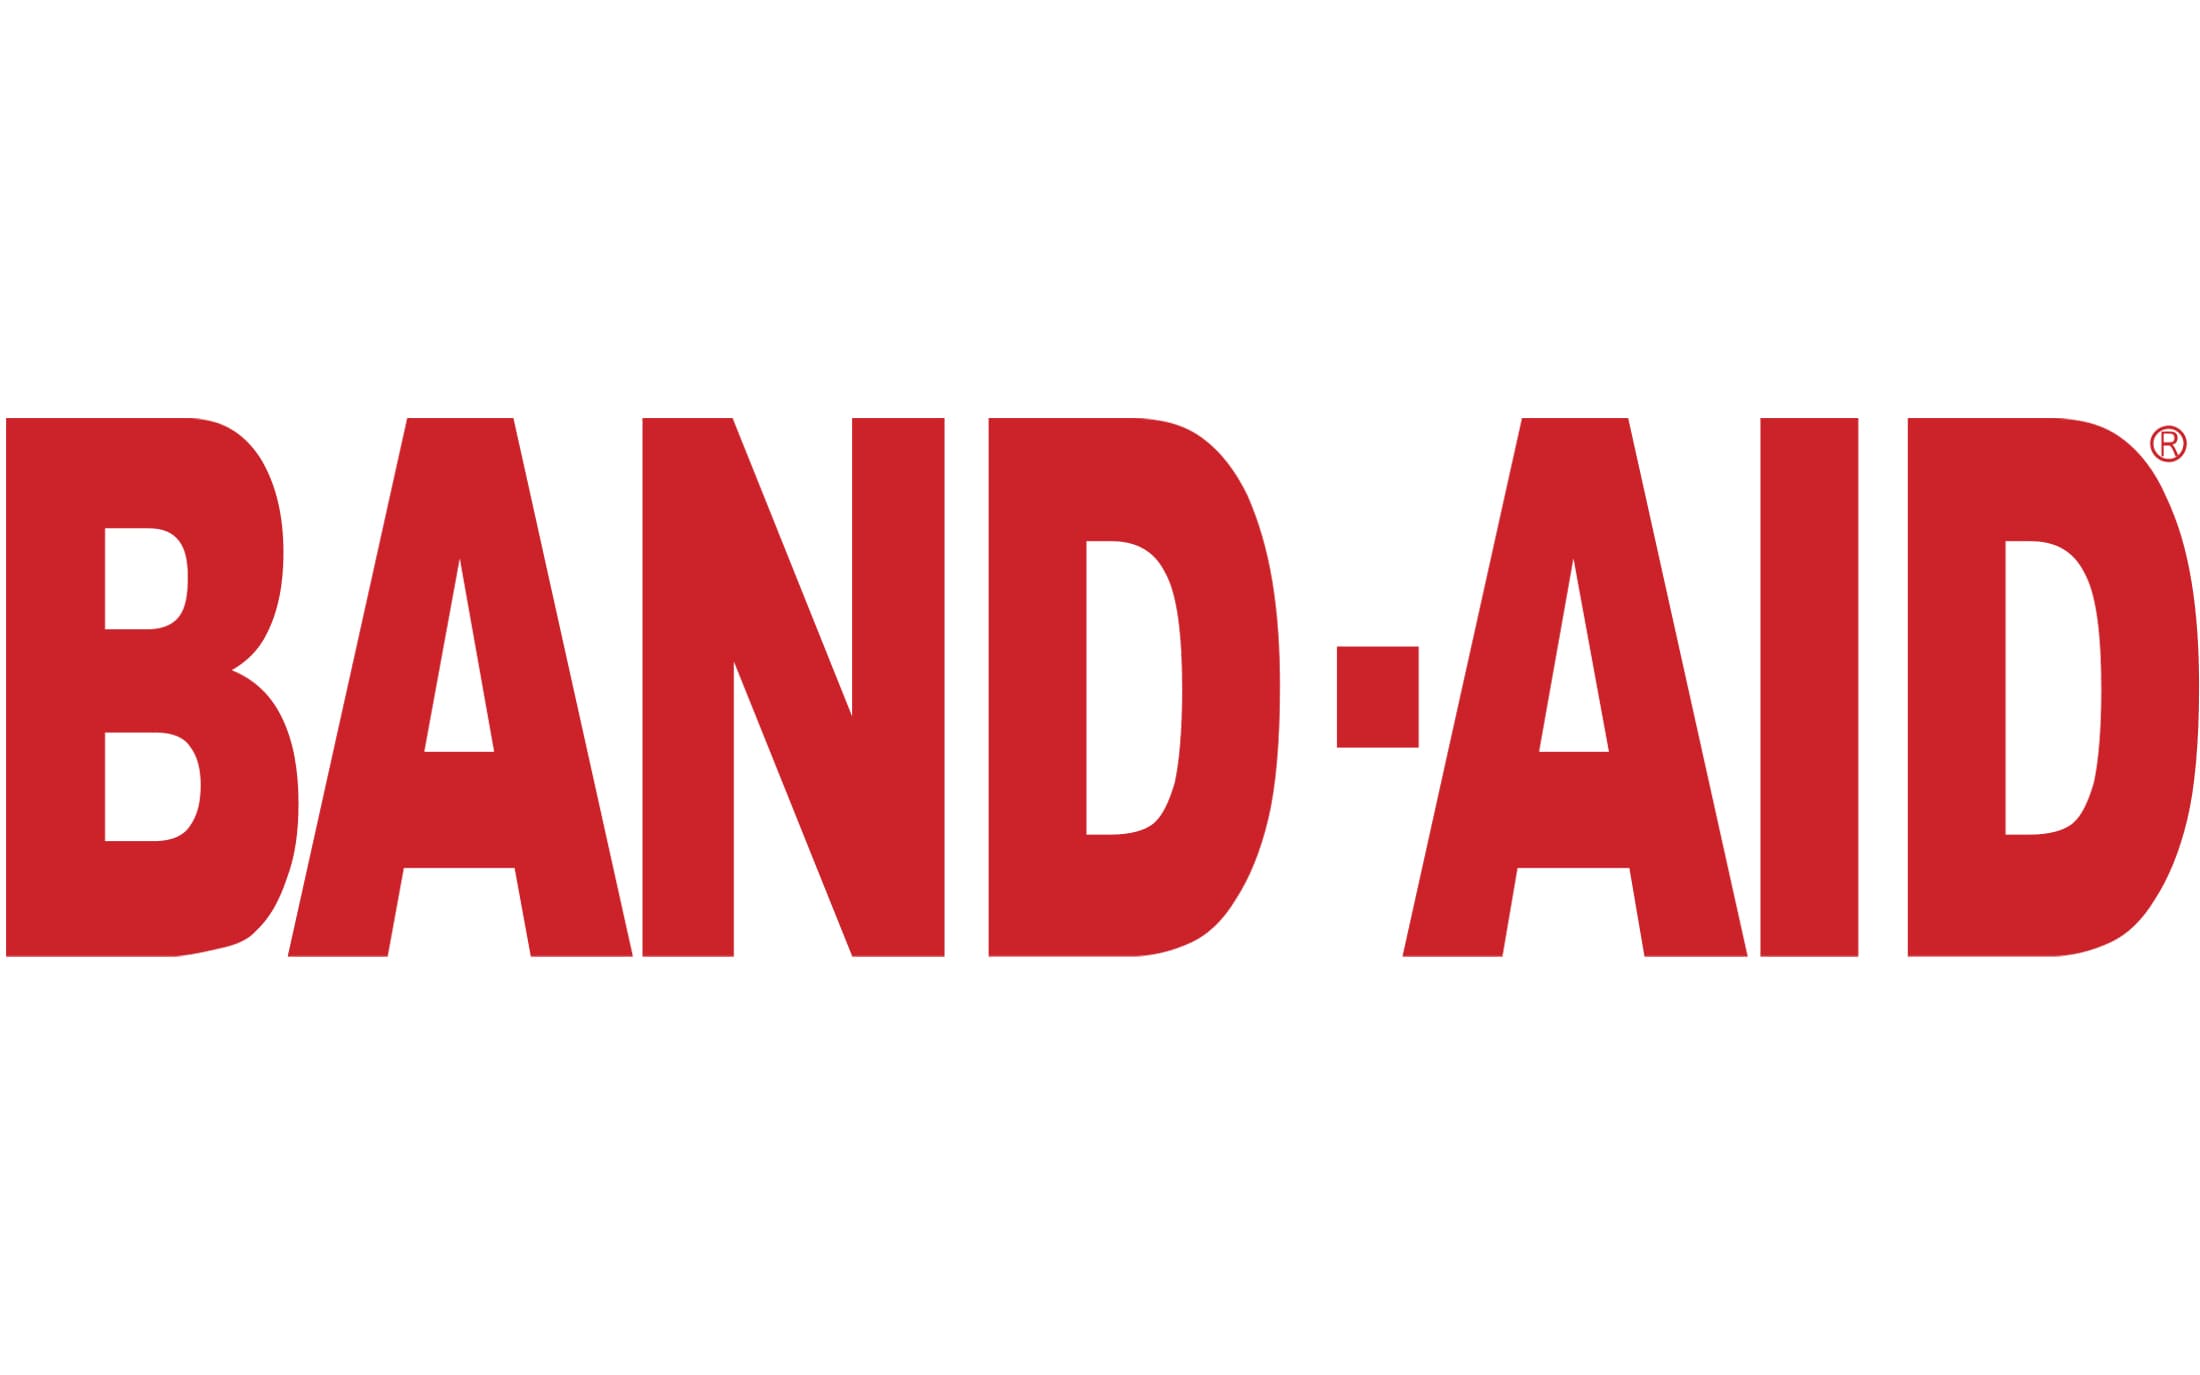 band aid band logo